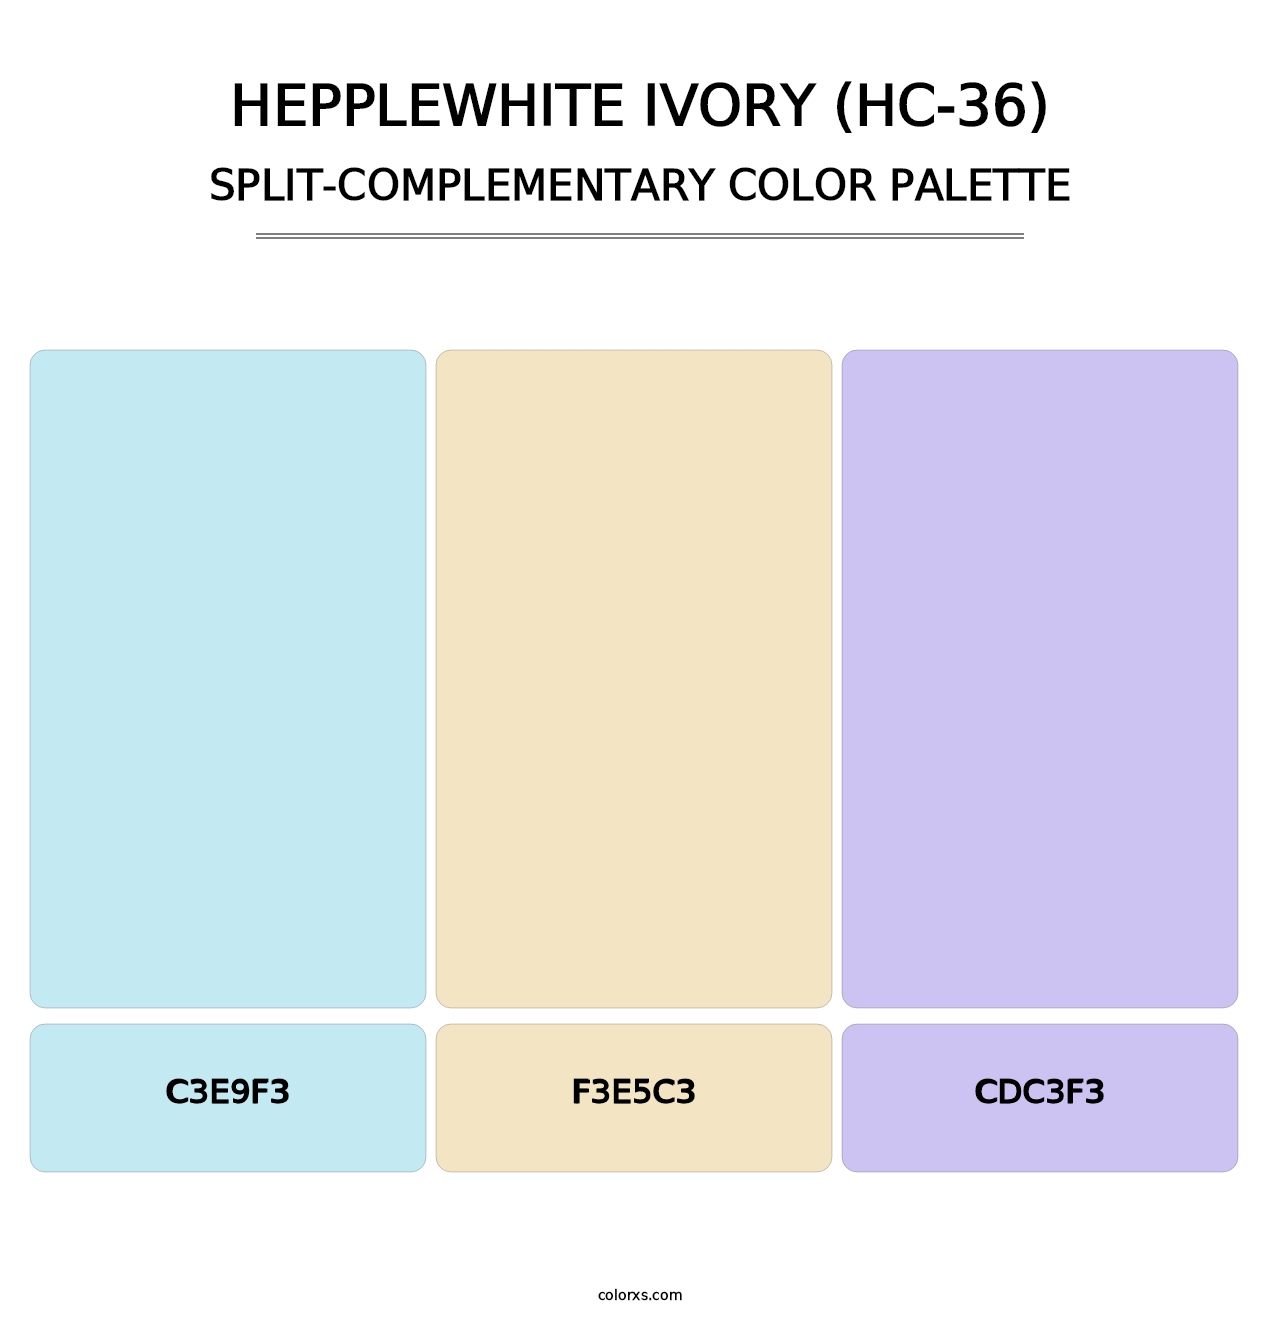 Hepplewhite Ivory (HC-36) - Split-Complementary Color Palette